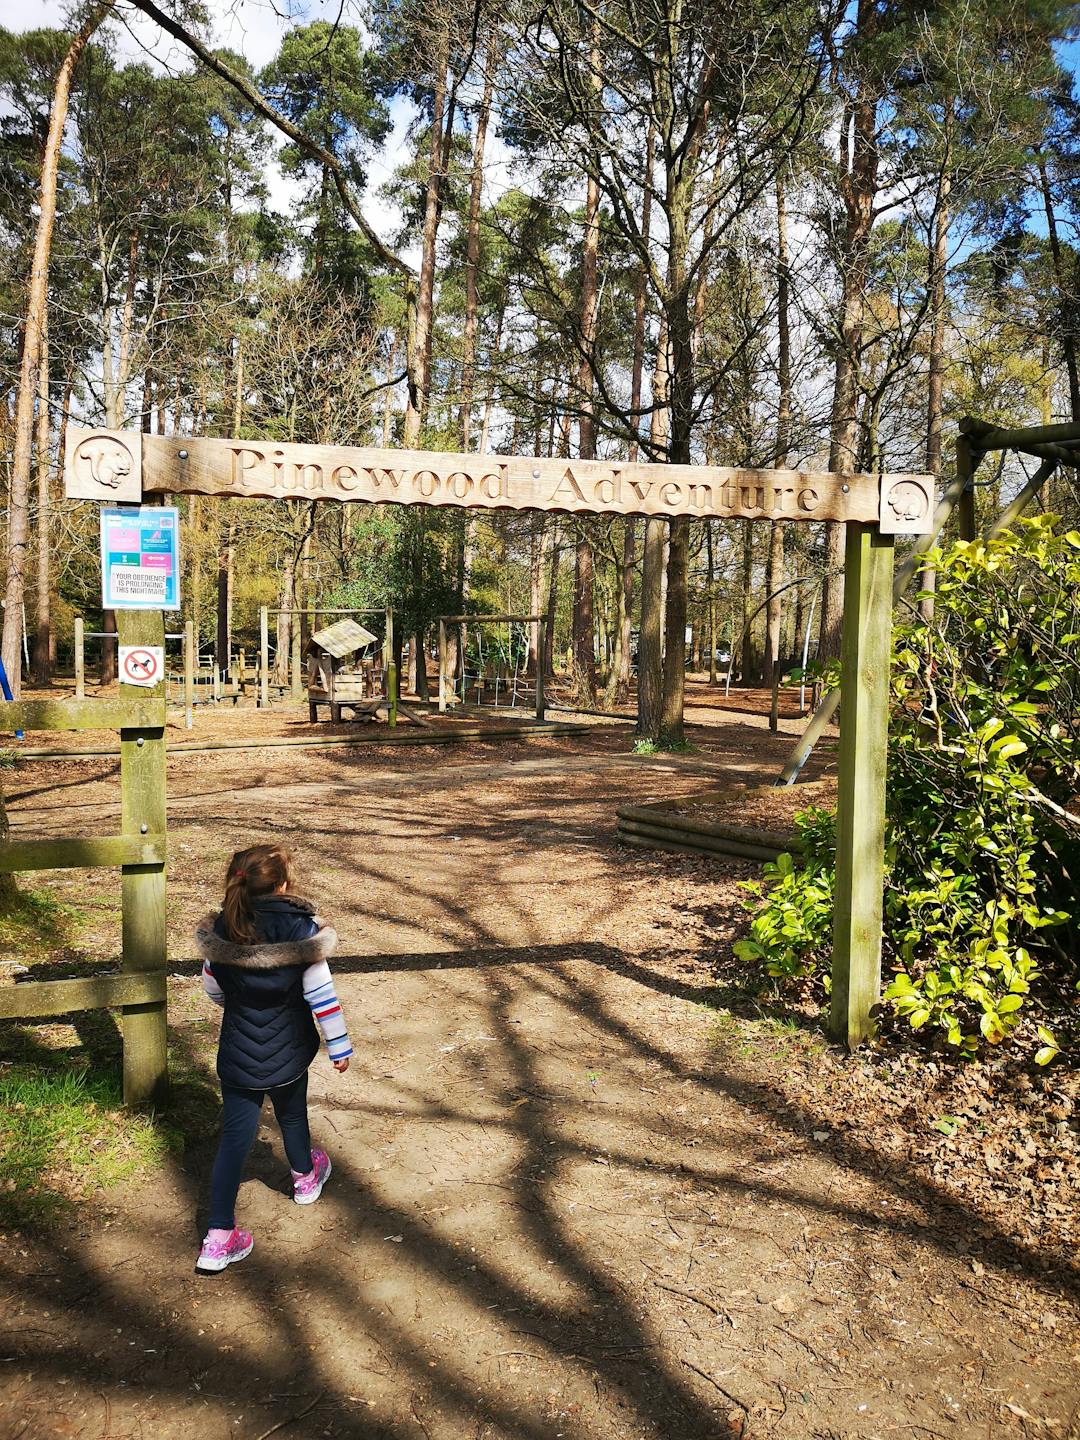 Pinewood Adventure Playground  - image 1